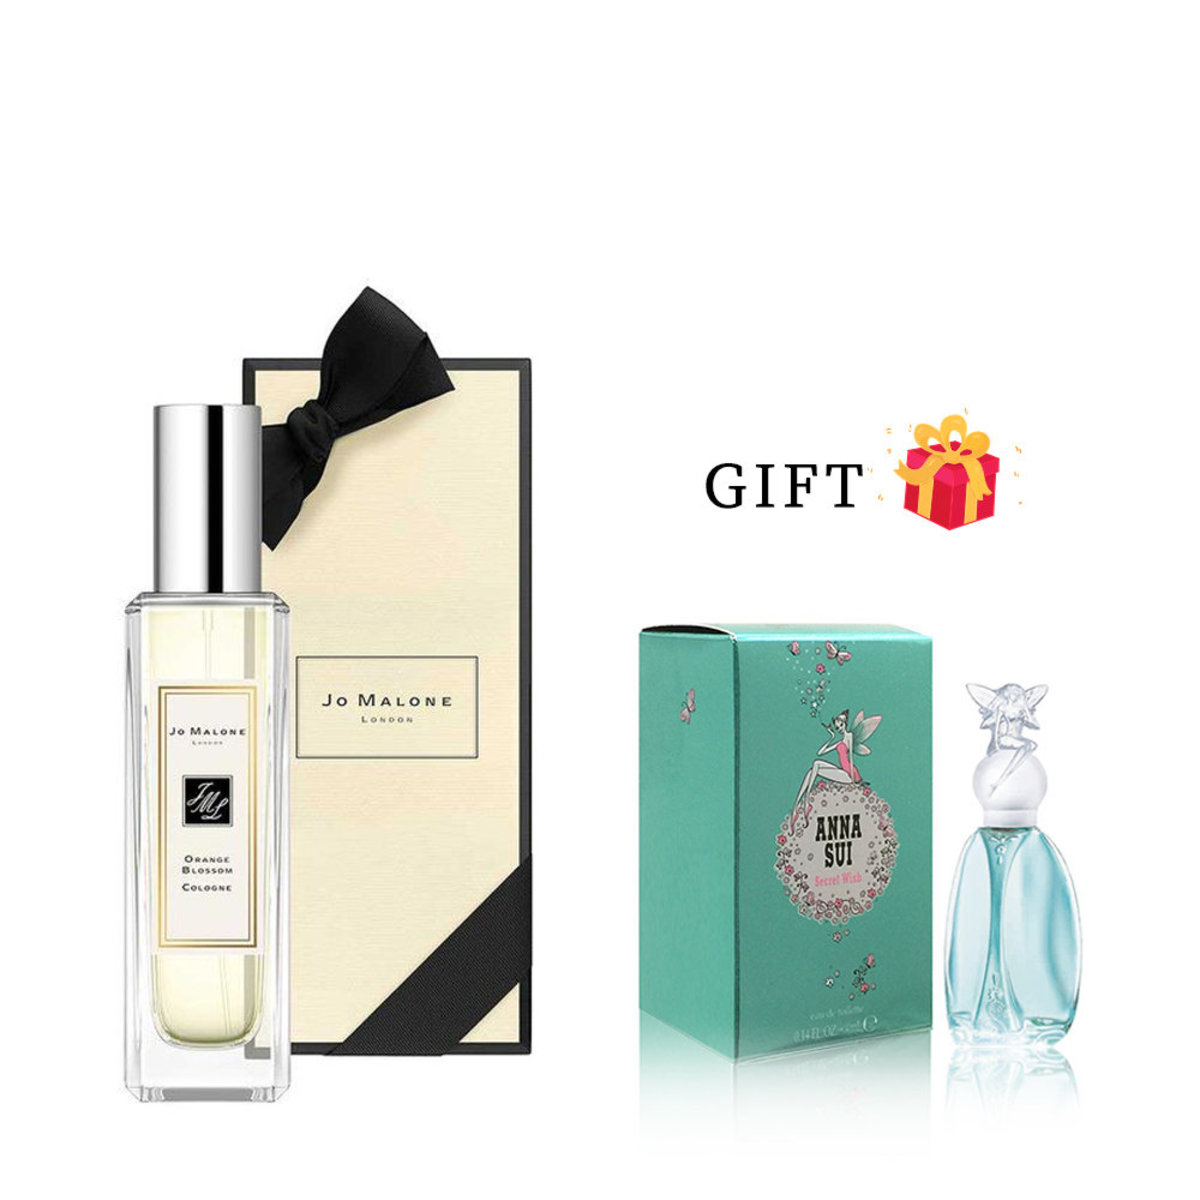 Jo Malone Jo Malone Orange Blossom Cologne Spray 30ml Gift Box Gift Anna Sui Secret Wish 4ml Hktvmall Online Shopping